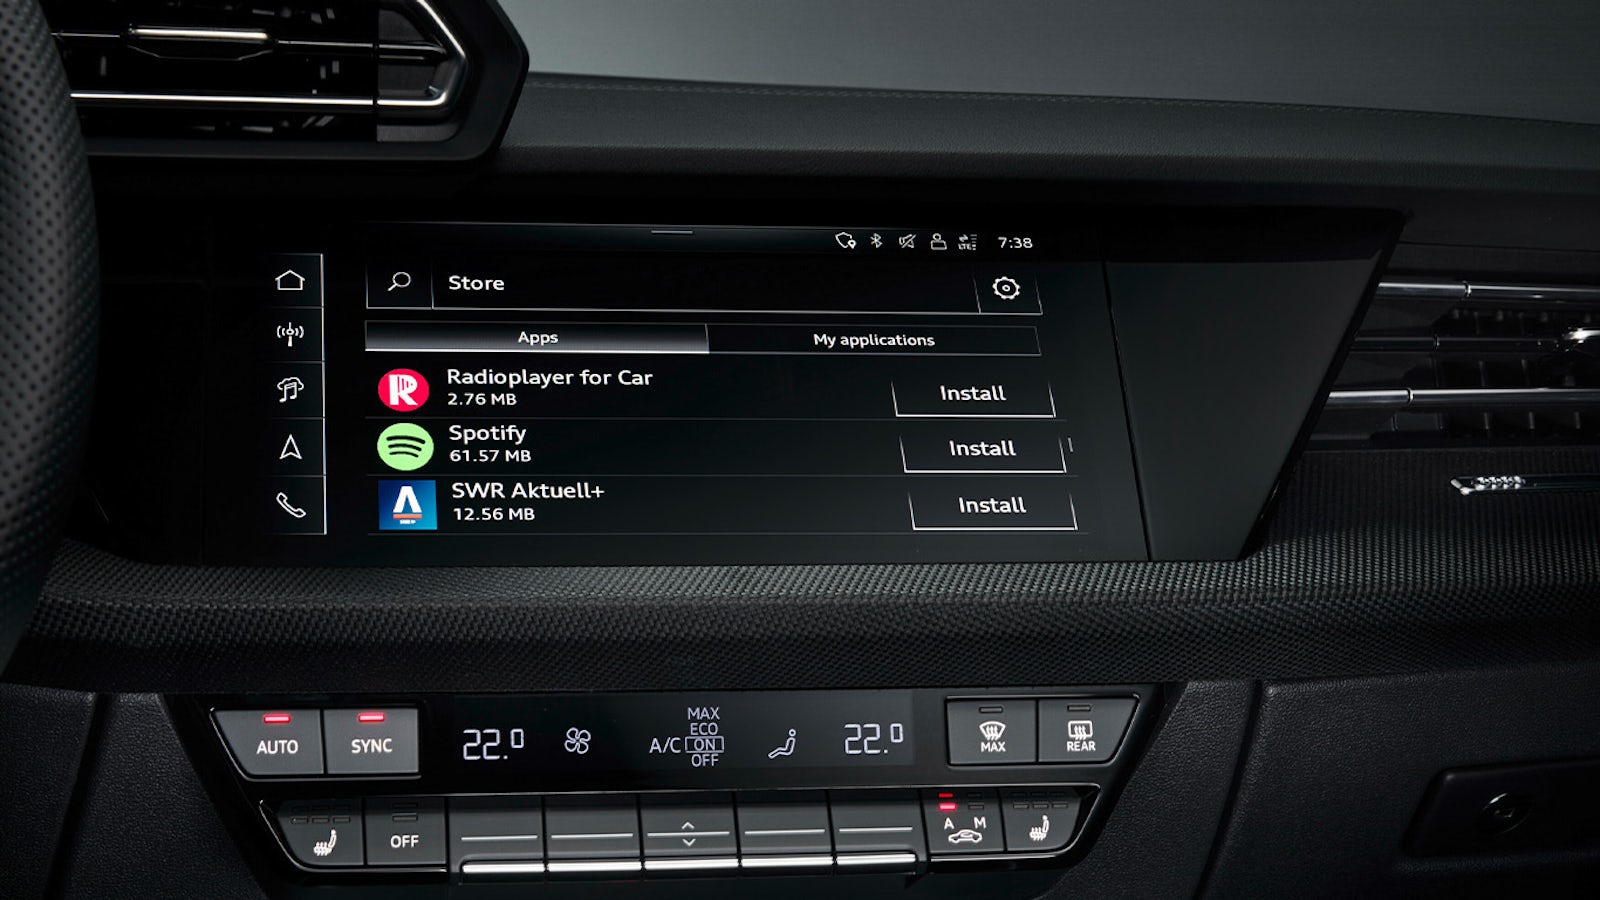 Audi A3 Infotainment